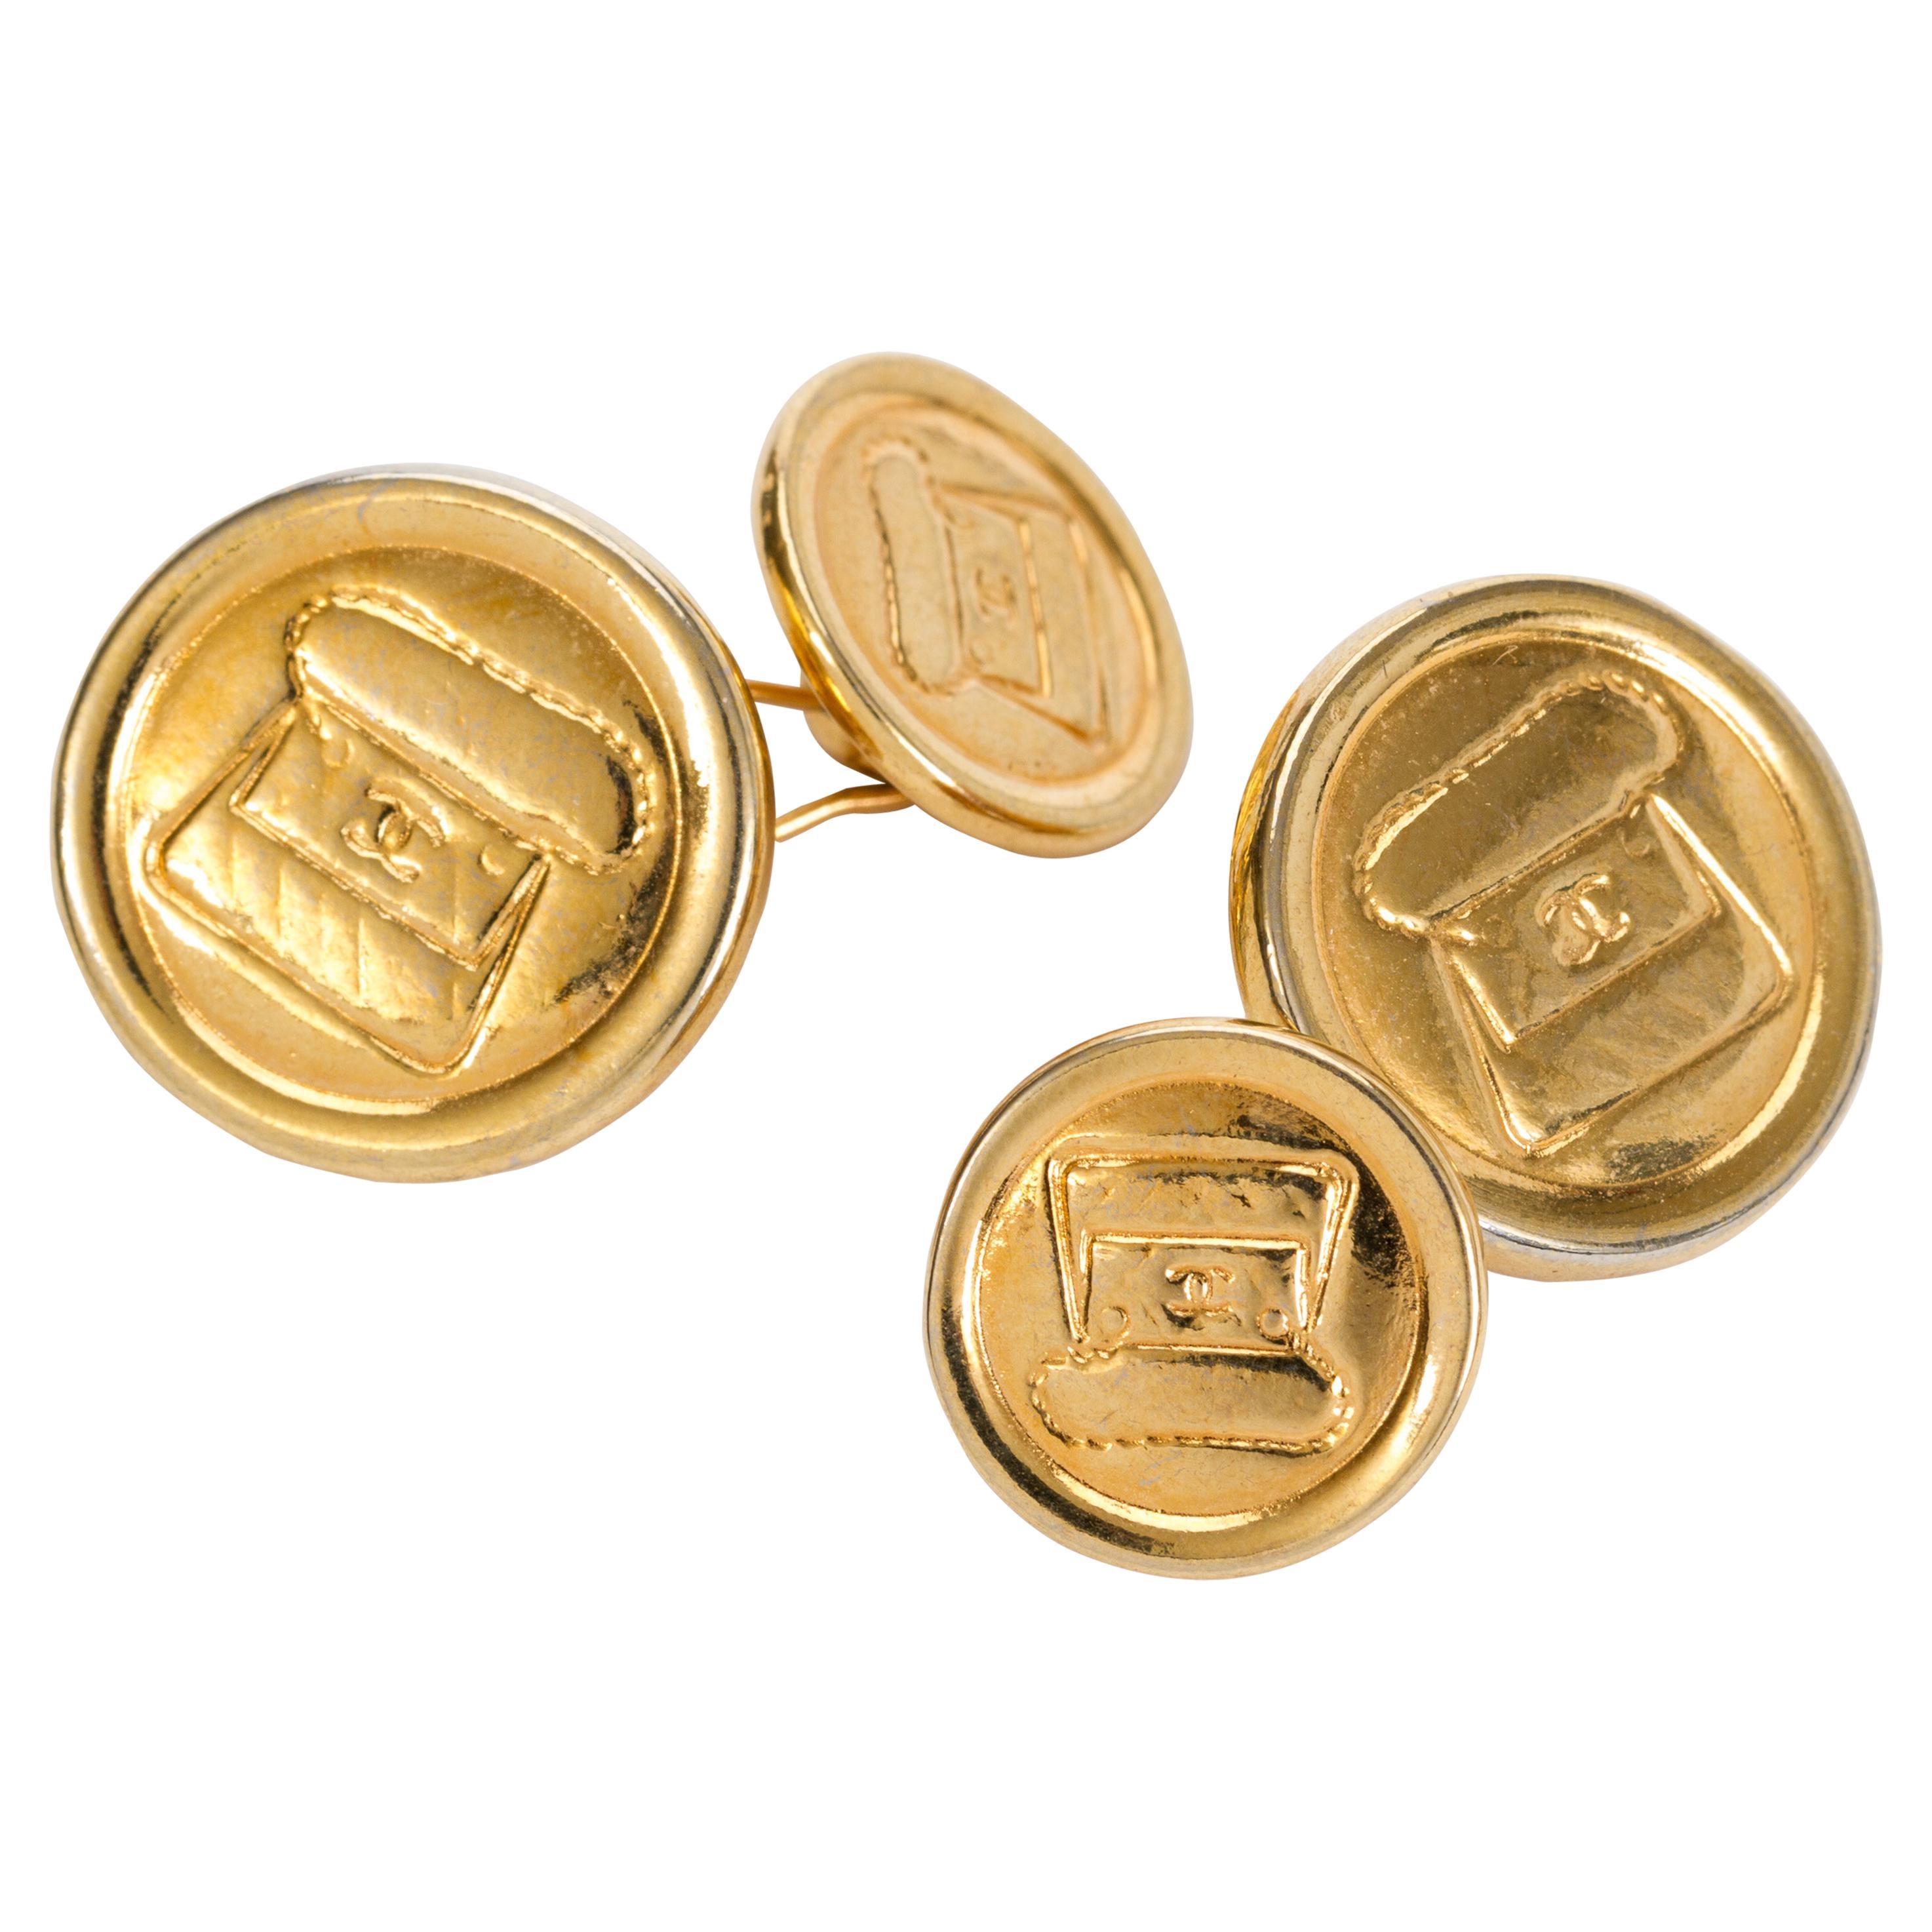 Vintage Chanel Gold Plated Flap Bag Cufflinks